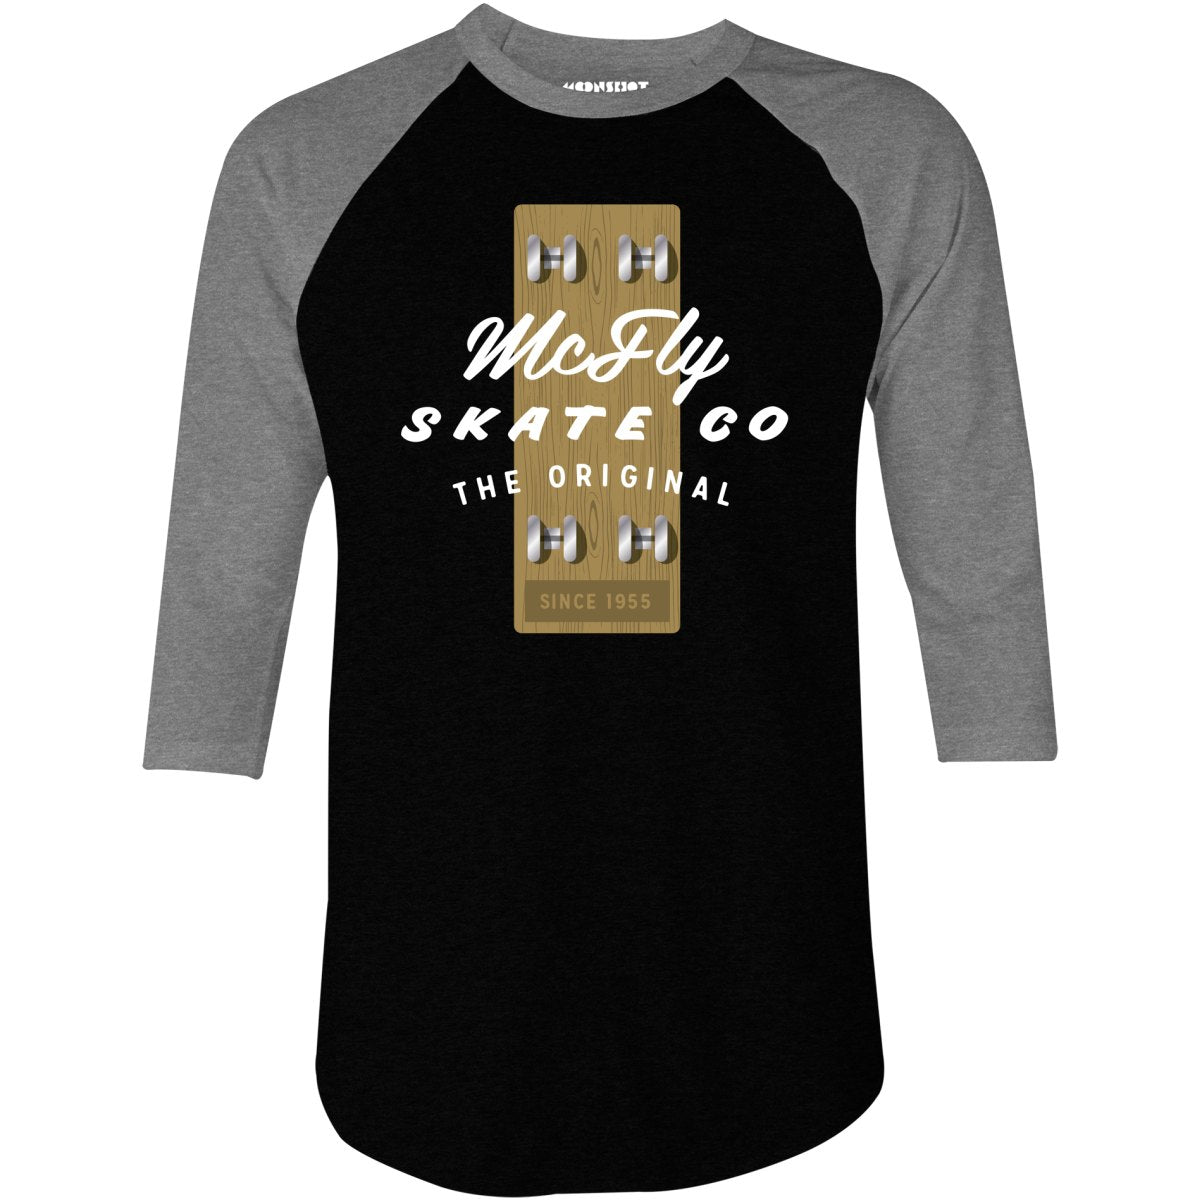 McFly Skate Co - 3/4 Sleeve Raglan T-Shirt